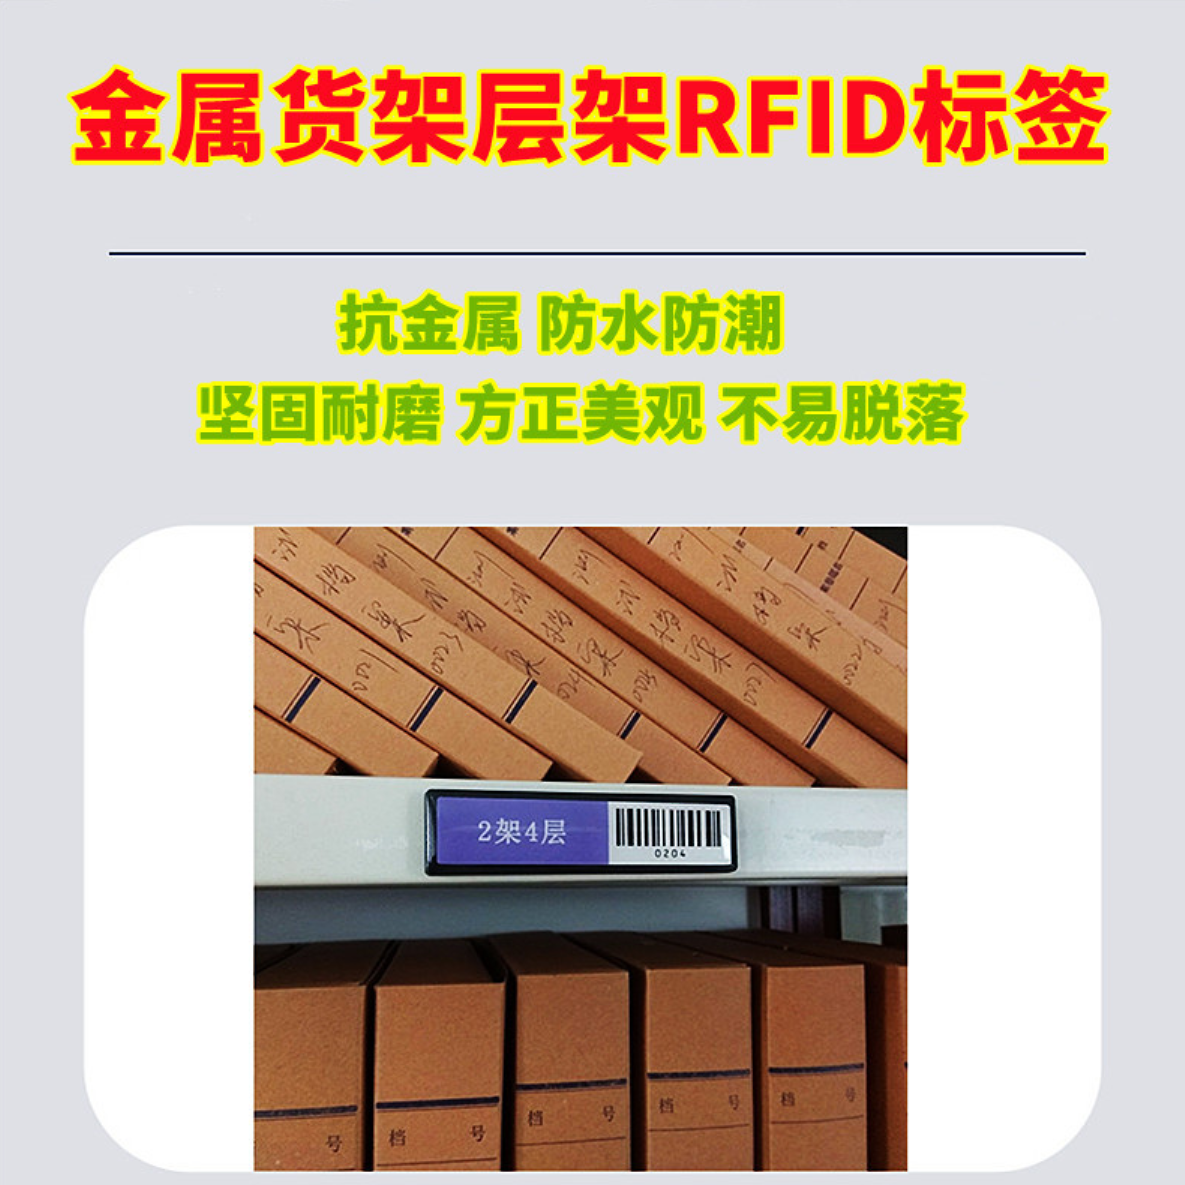 RFID图书馆层架标签ABS抗金属高频15693协议耐高温电子货架标签图片